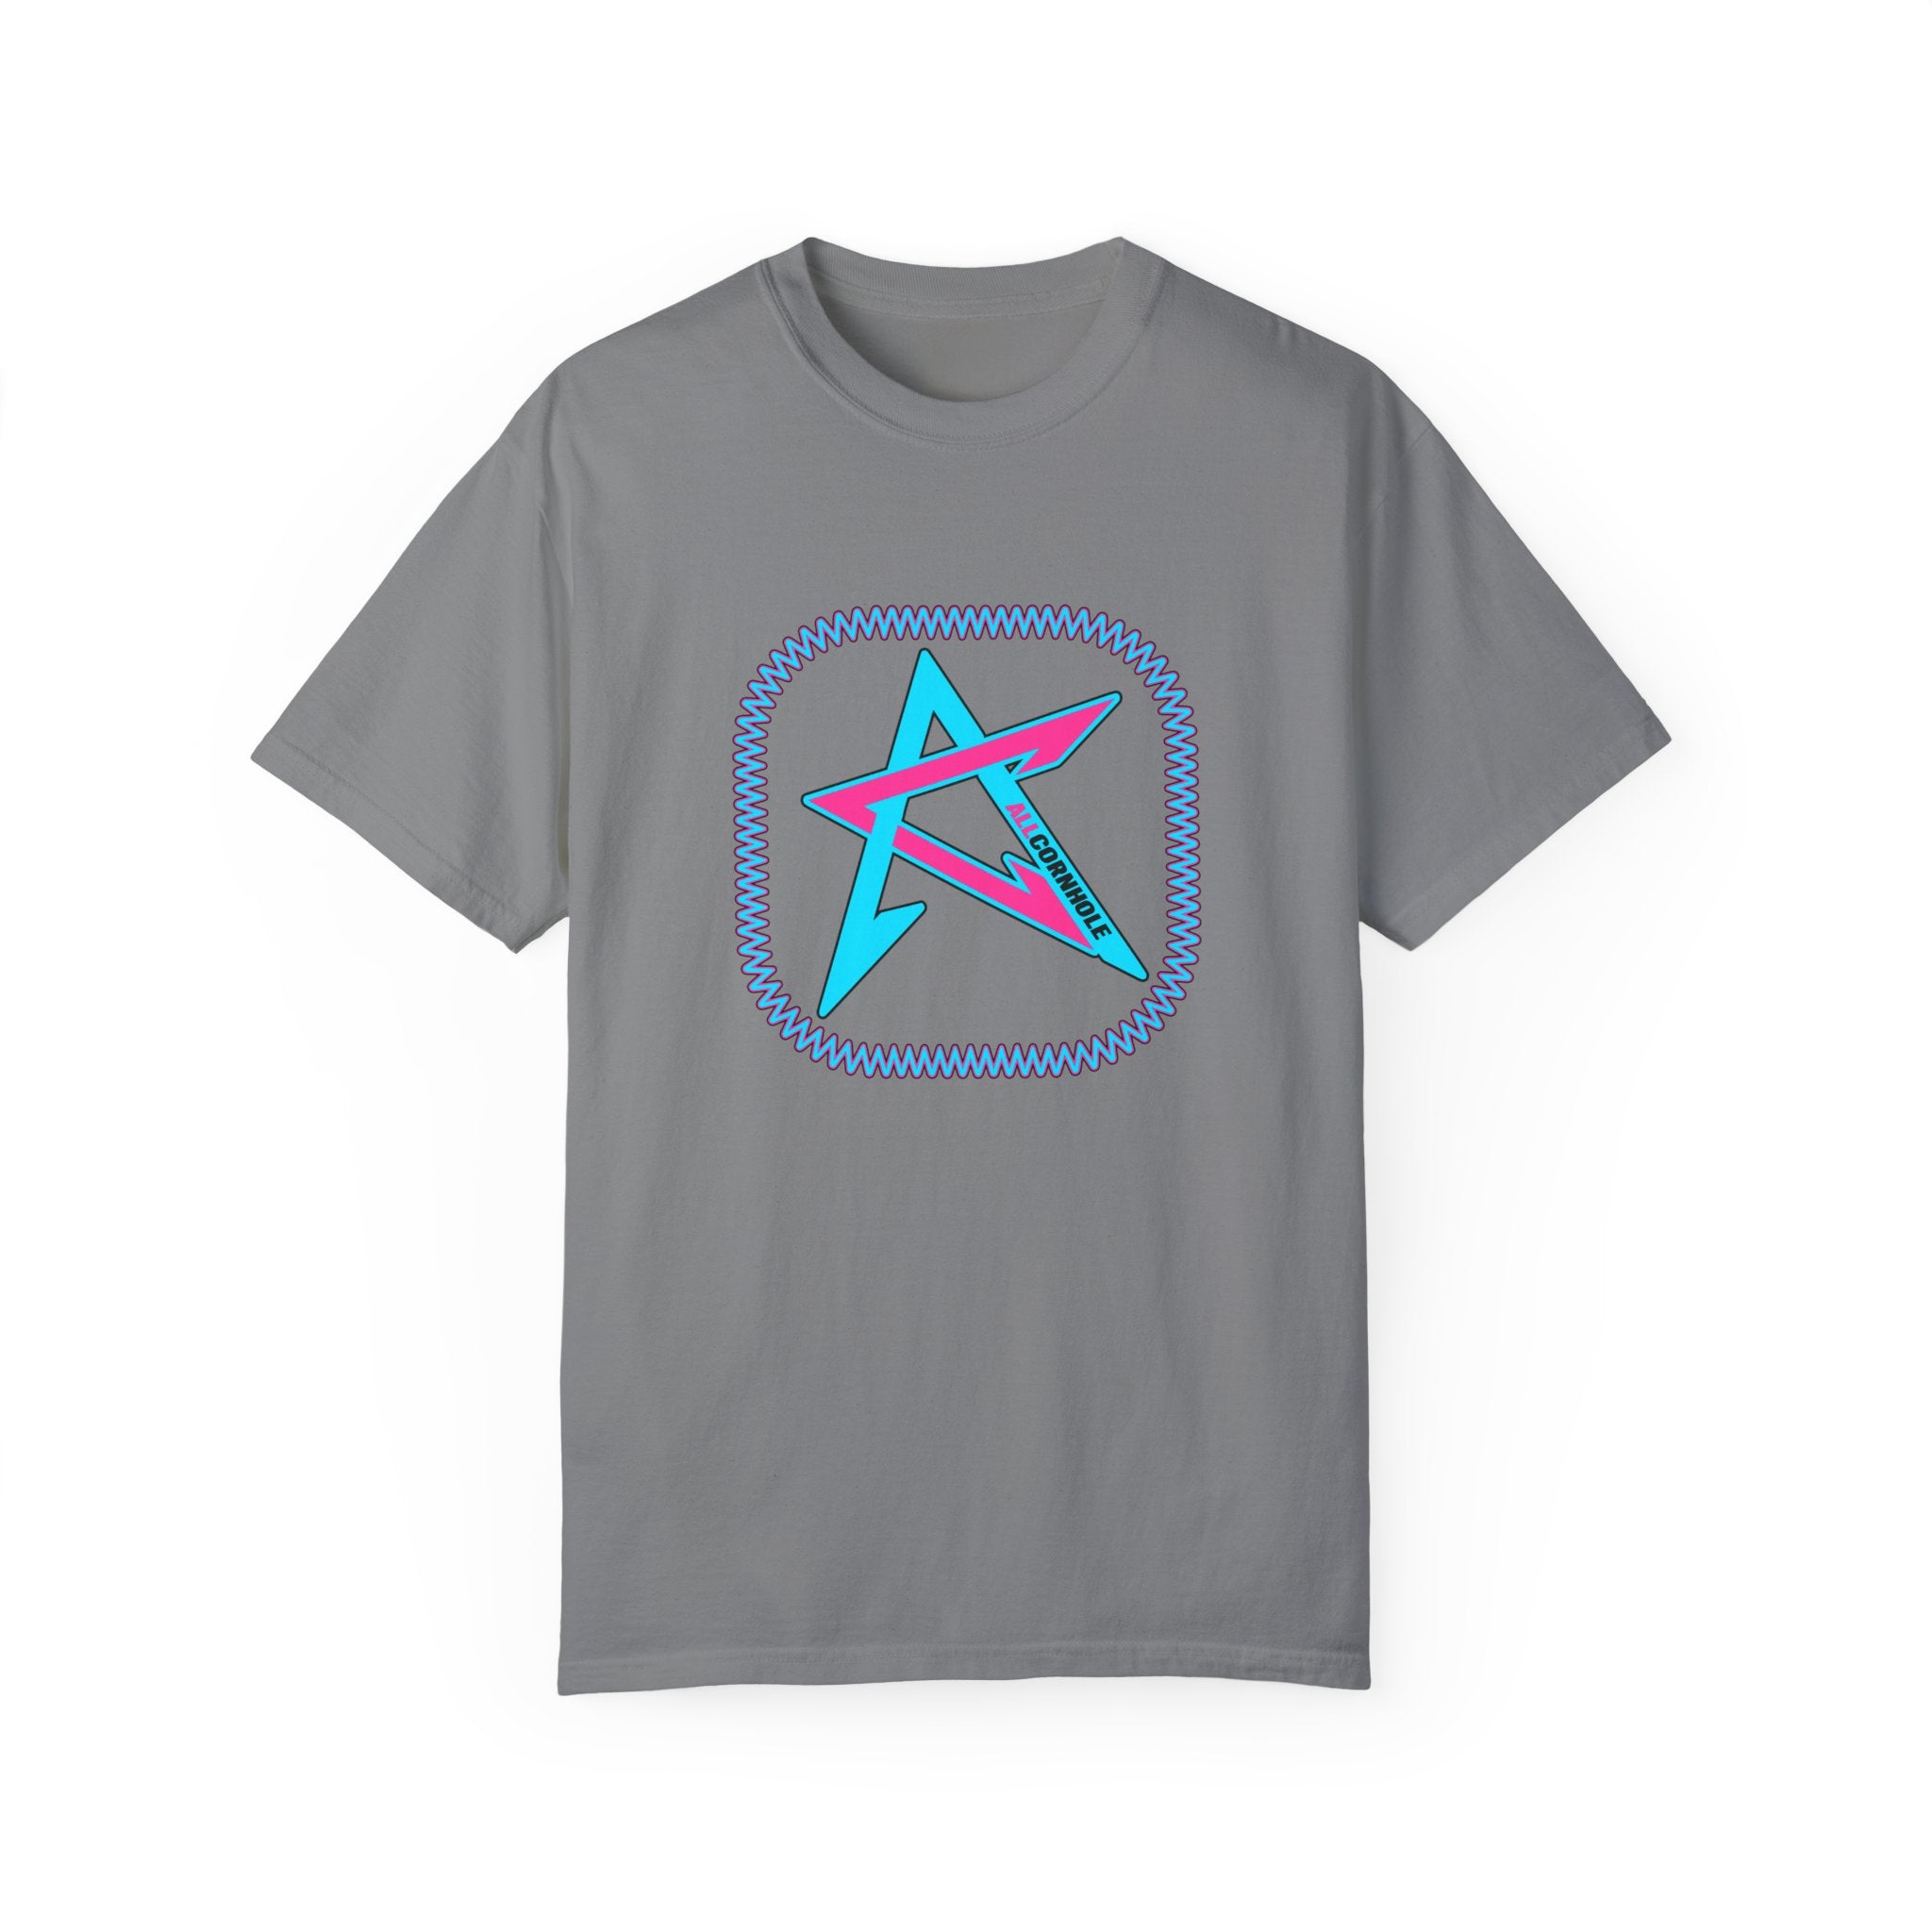 Unisex Heavyweight Garment-Dyed T-shirt - Comfort Colors